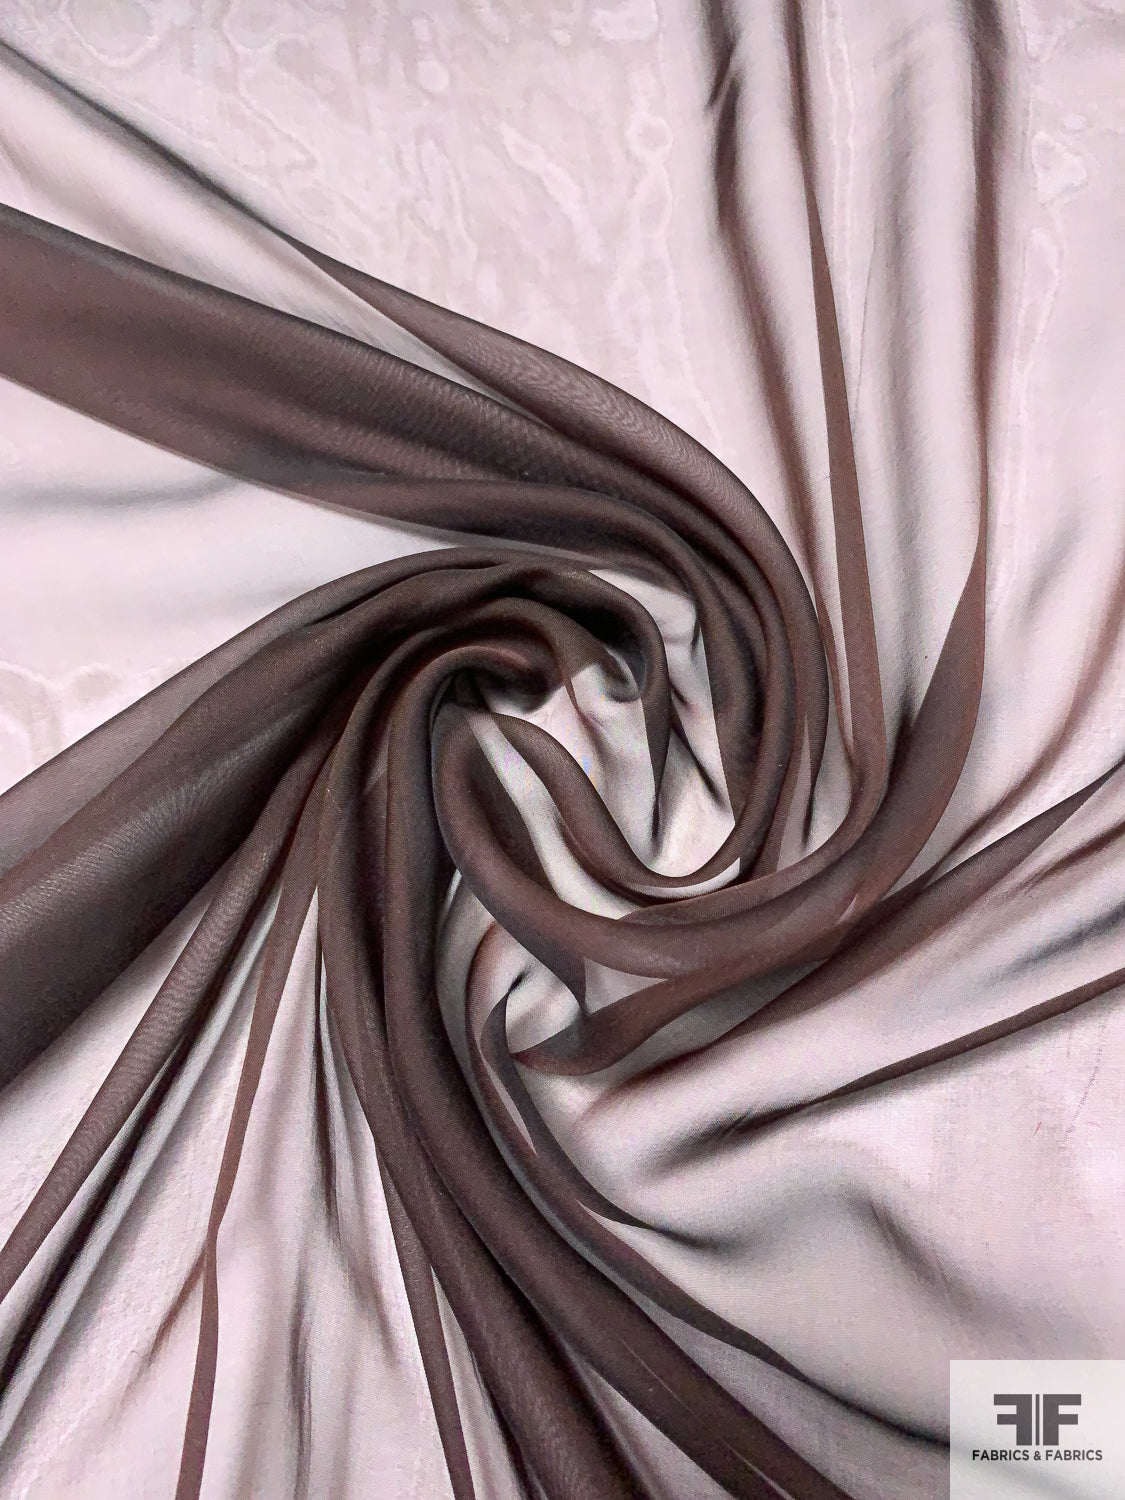 Iridescent Silk Chiffon - Dark Brown